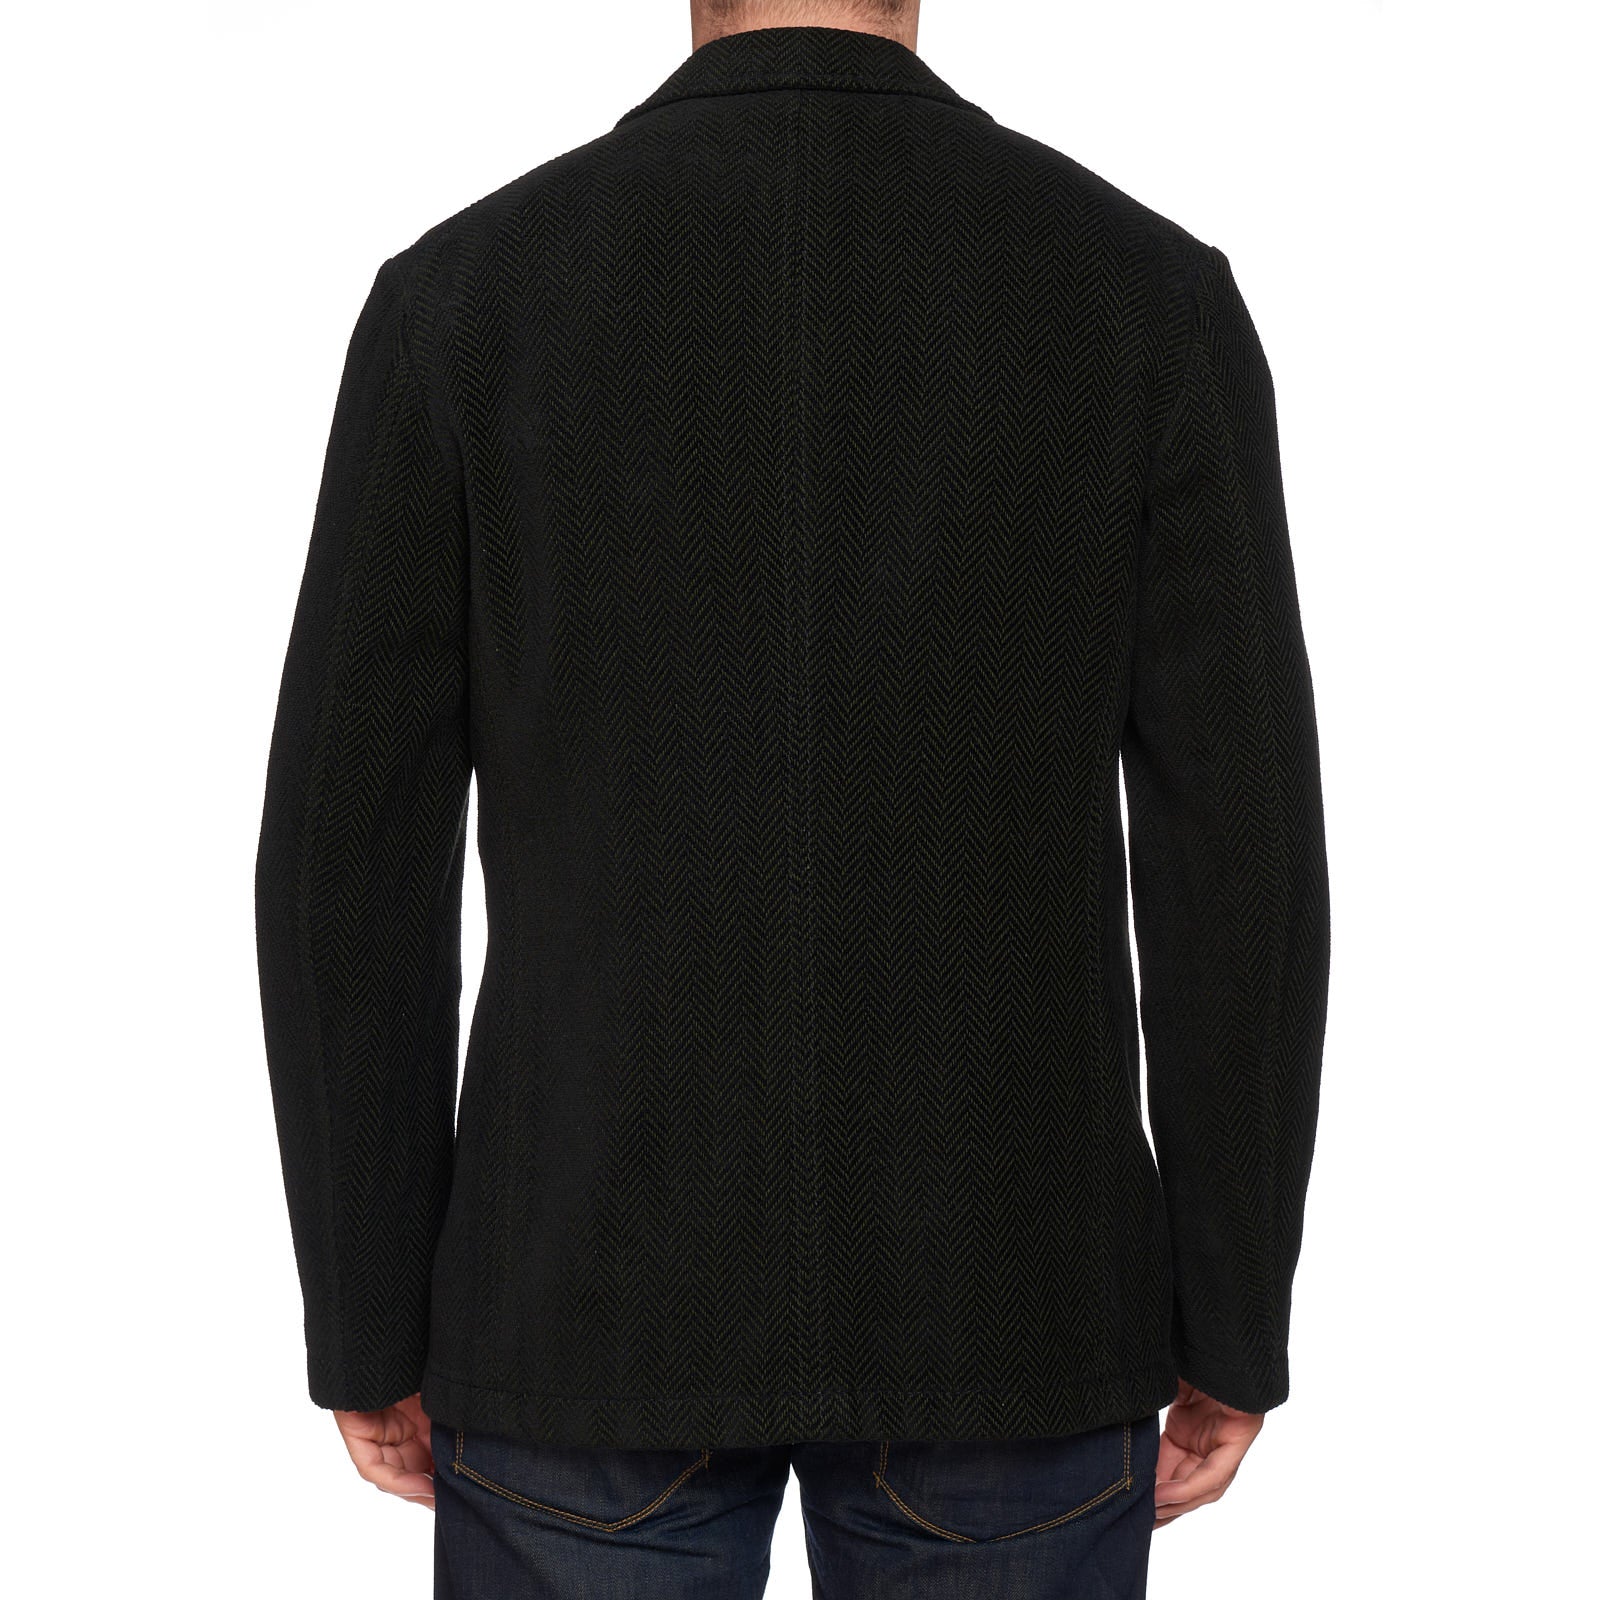 BOGLIOLI "Wear" Green Herringbone Cotton-Cashmere-Wool Unlined Pea Coat 50 NEW 40 BOGLIOLI